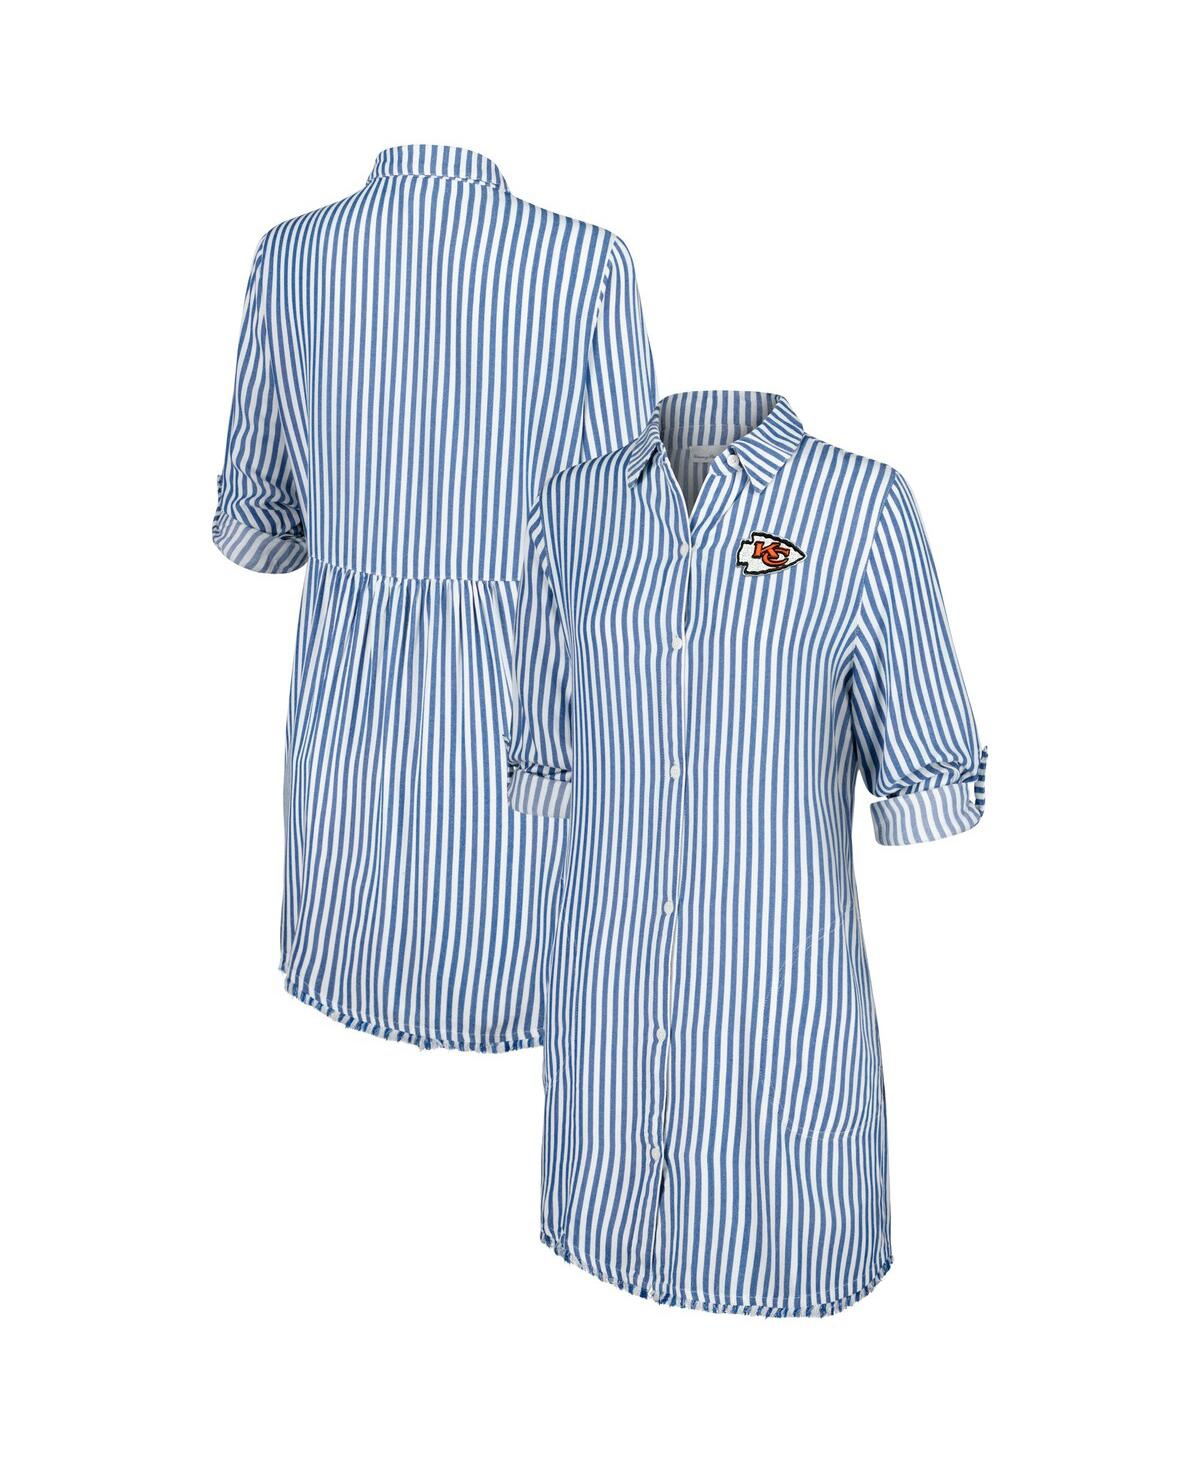 Women's Blue/White Kansas City Chiefs Chambray Stripe Cover-Up Shirt Dress - Blue, white